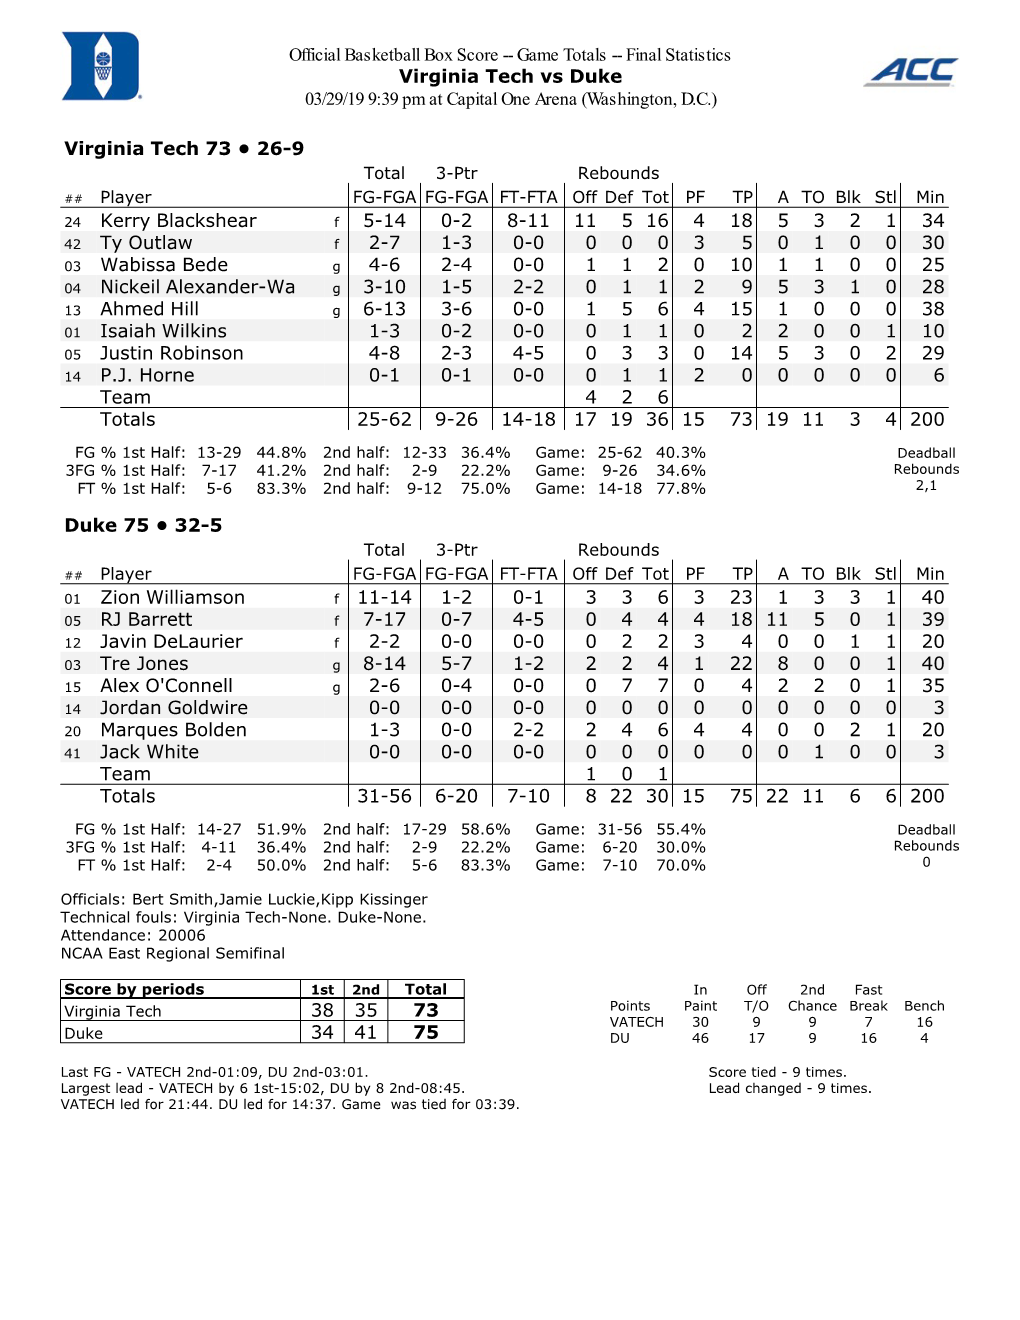 Official Basketball Box Score -- Game Totals -- Final Statistics Virginia Tech Vs Duke 03/29/19 9:39 Pm at Capital One Arena (Washington, D.C.)